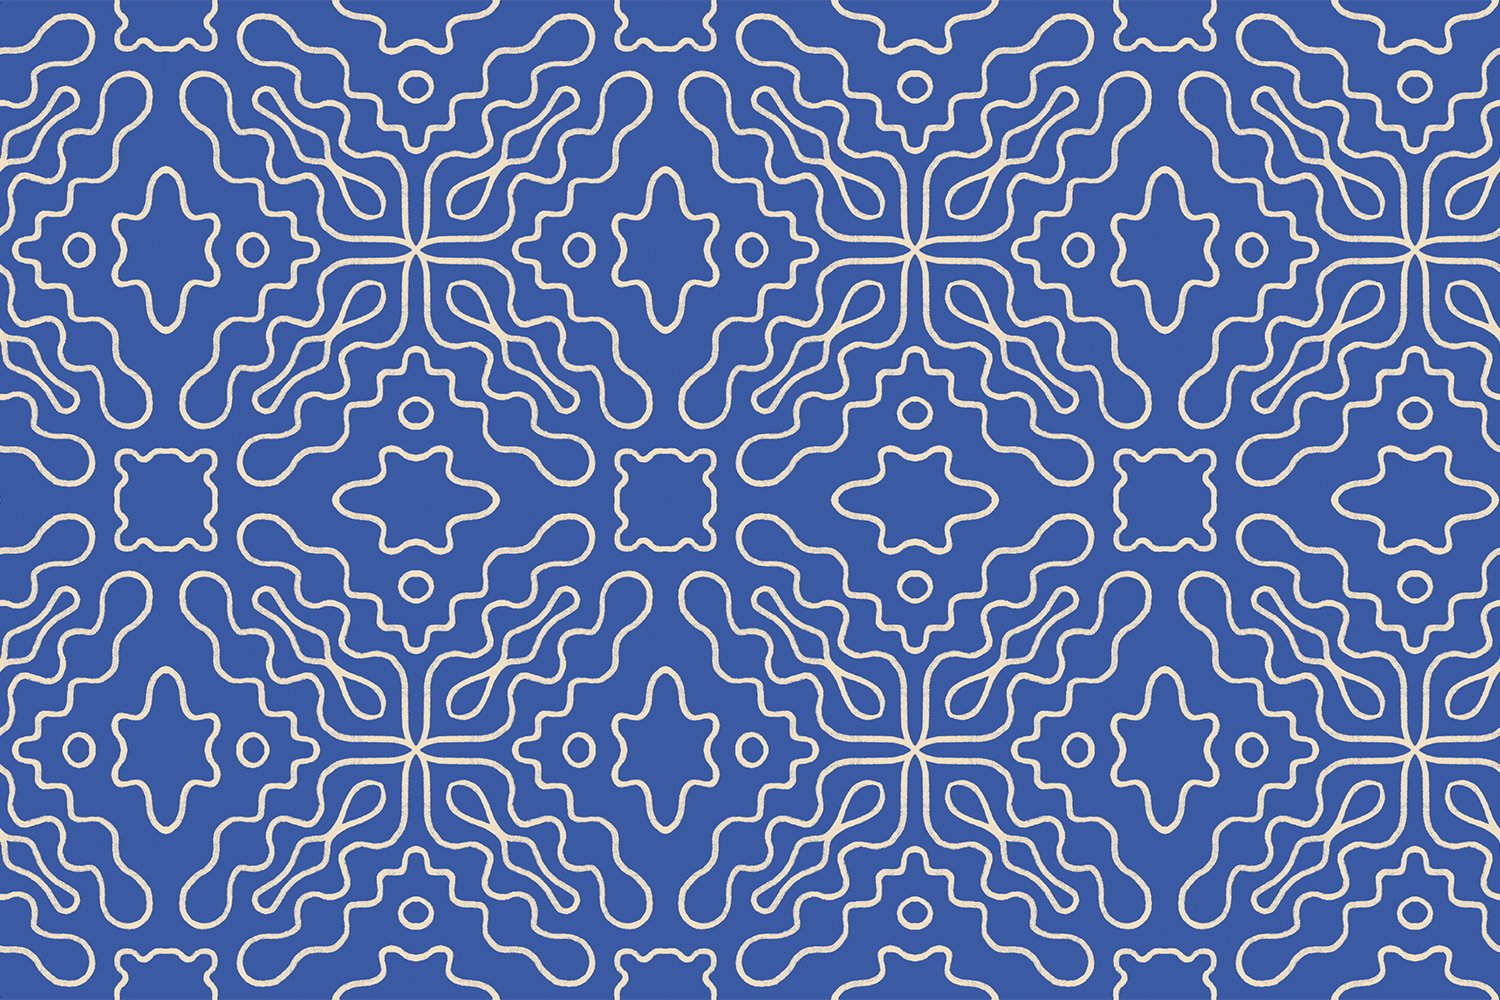 Pattern 1.jpg